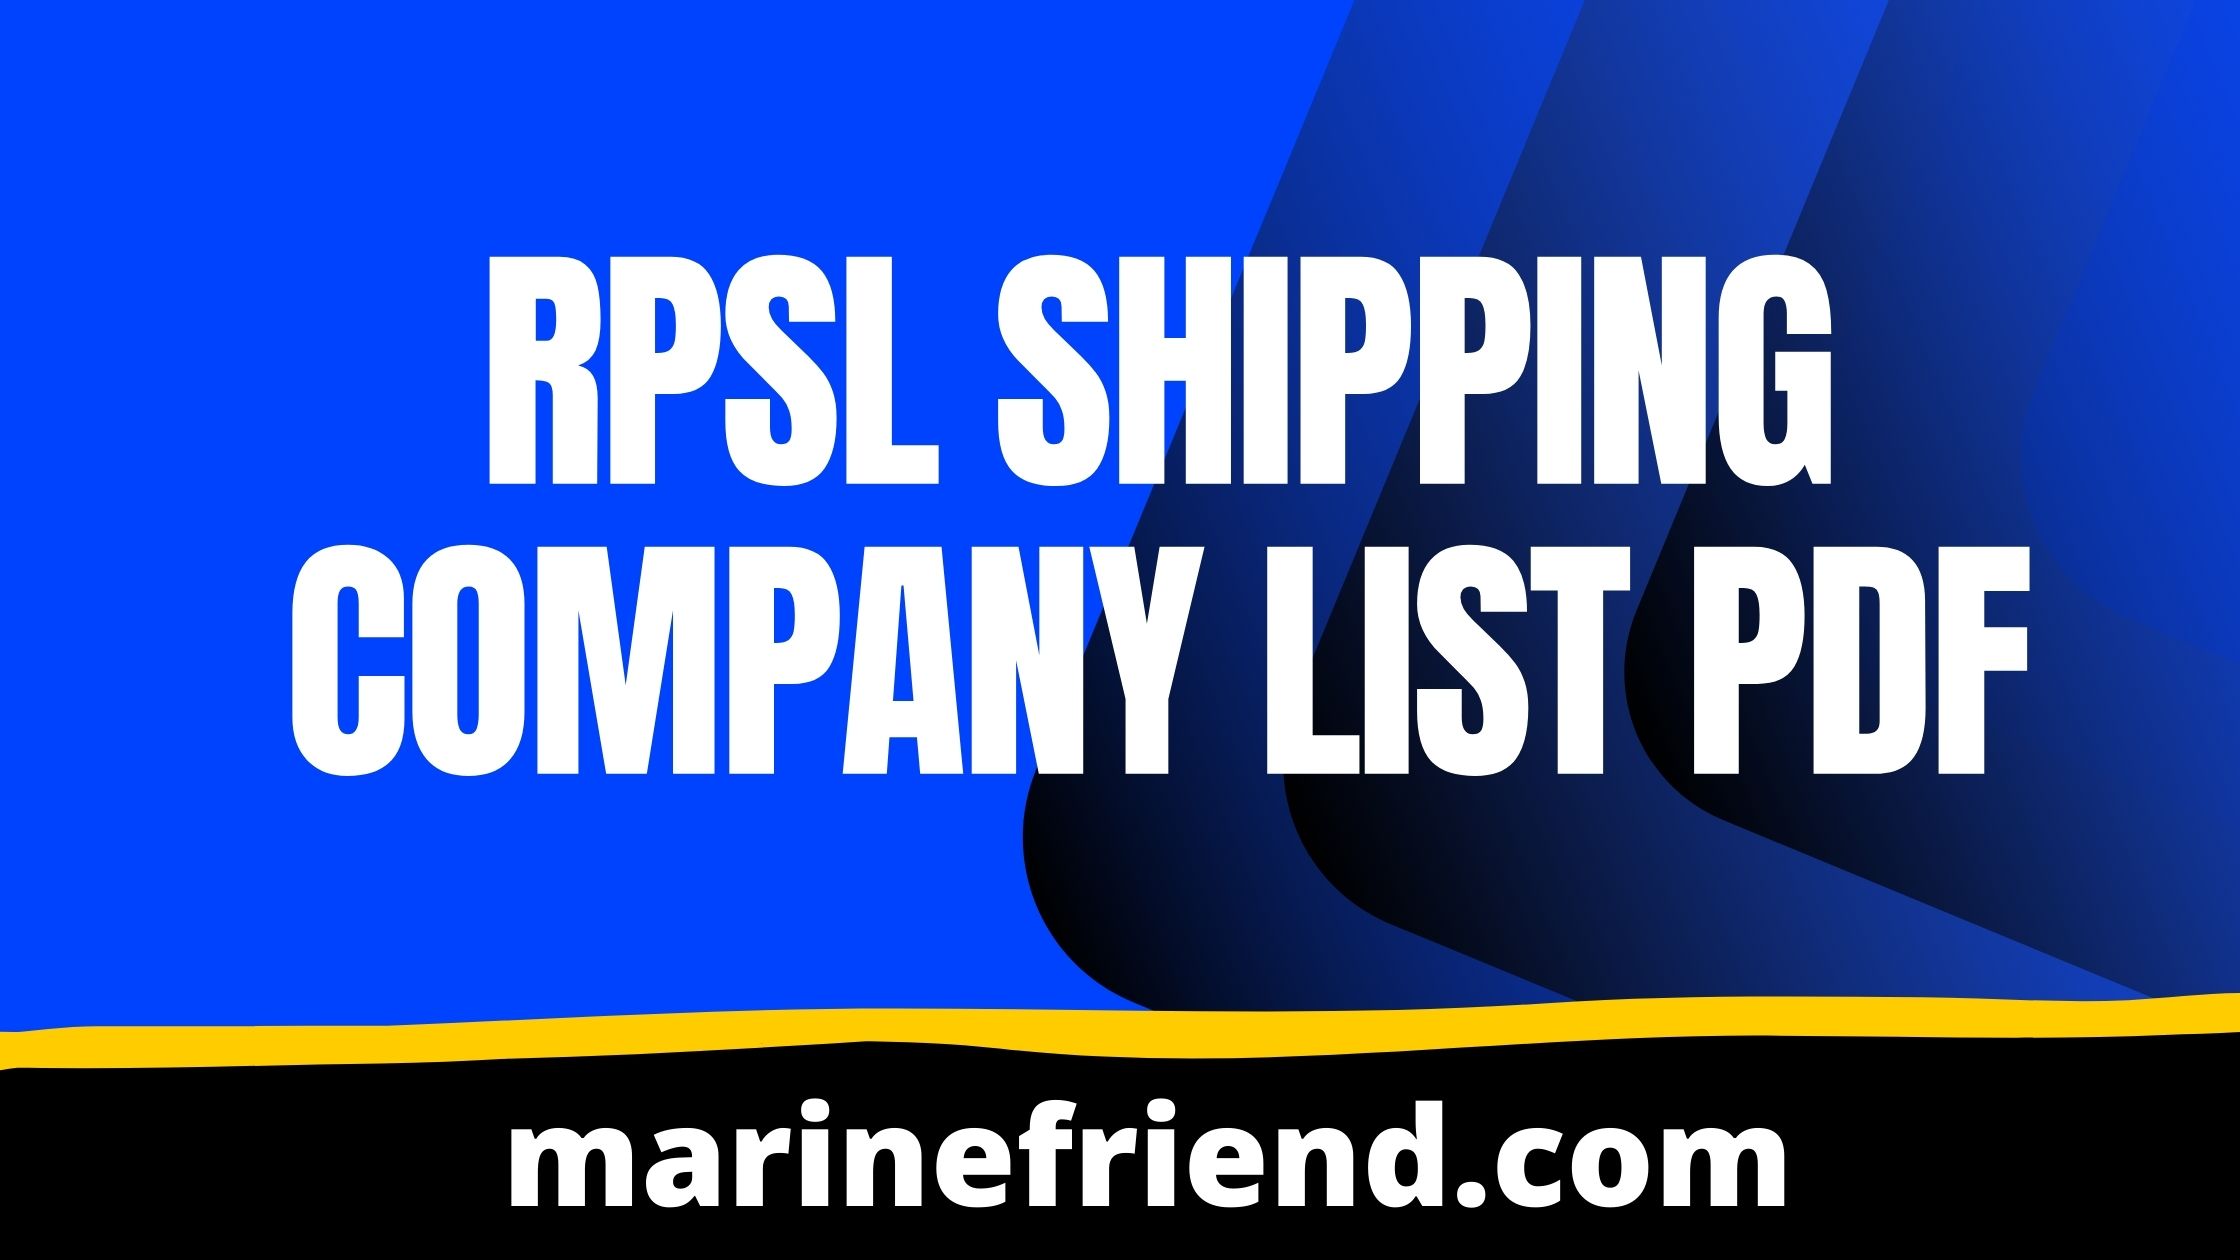 rpsl shipping company list pdf